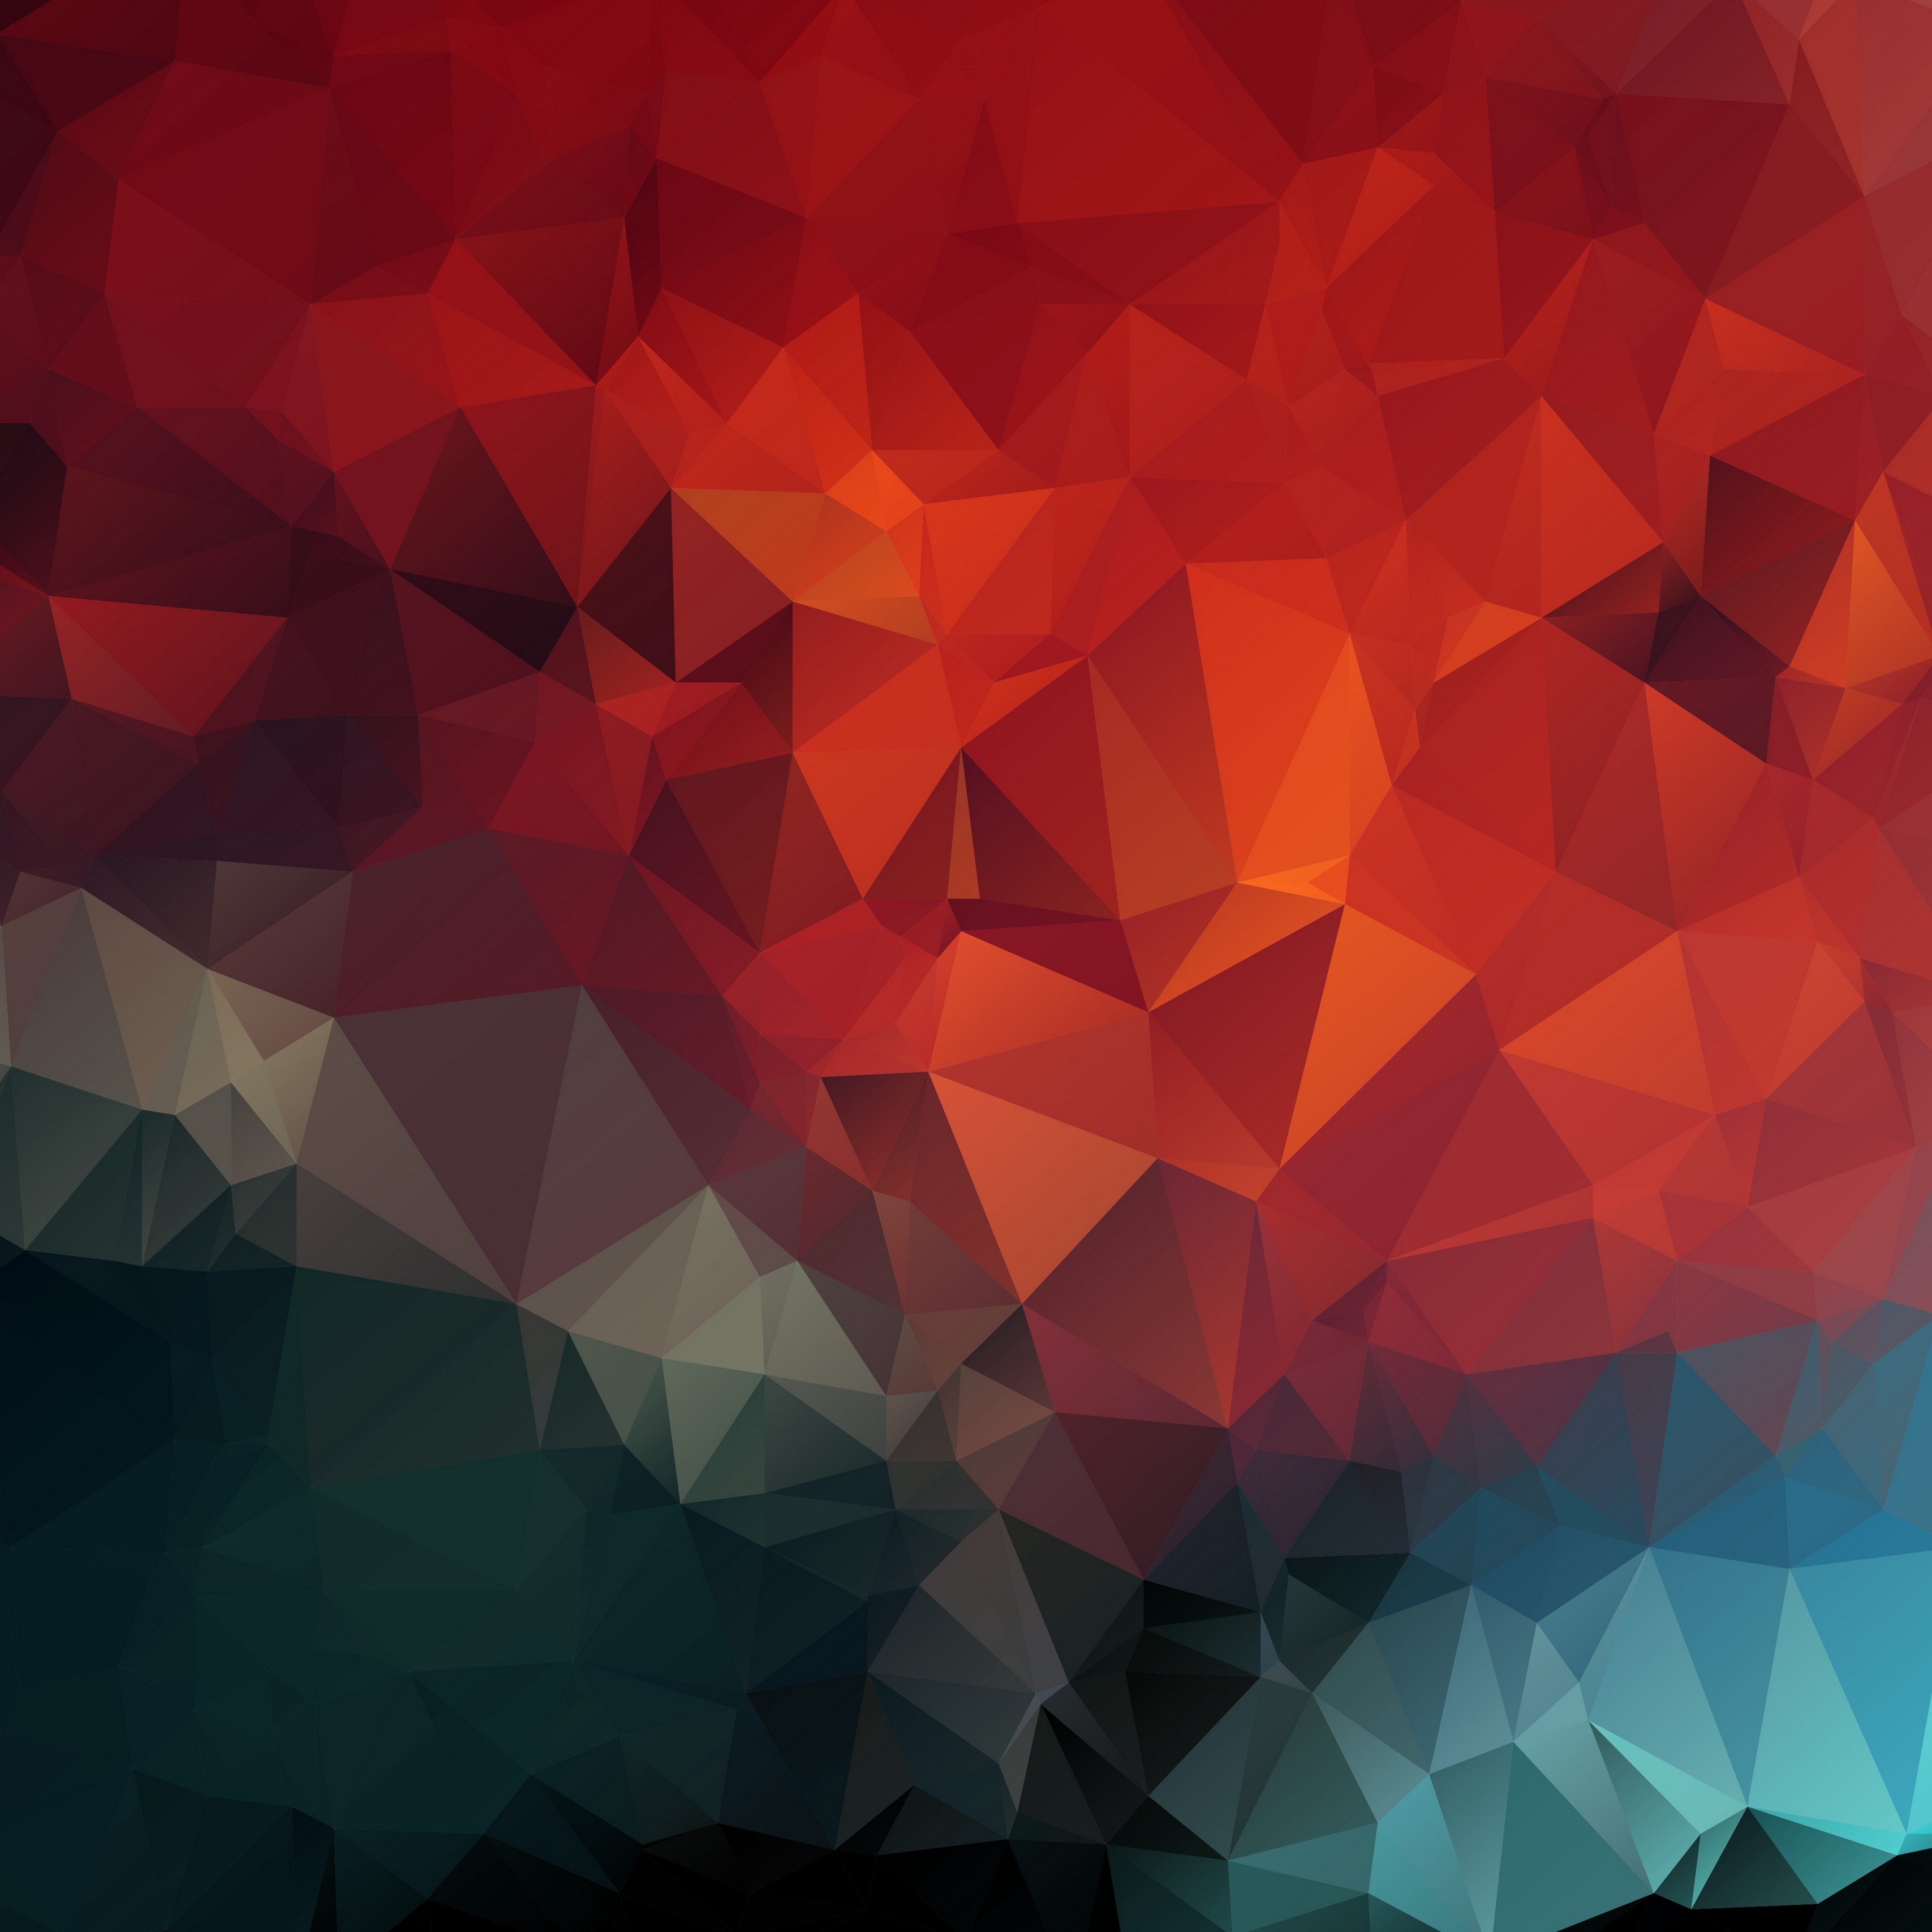 ipad pro wallpaper,red,orange,blue,sky,triangle